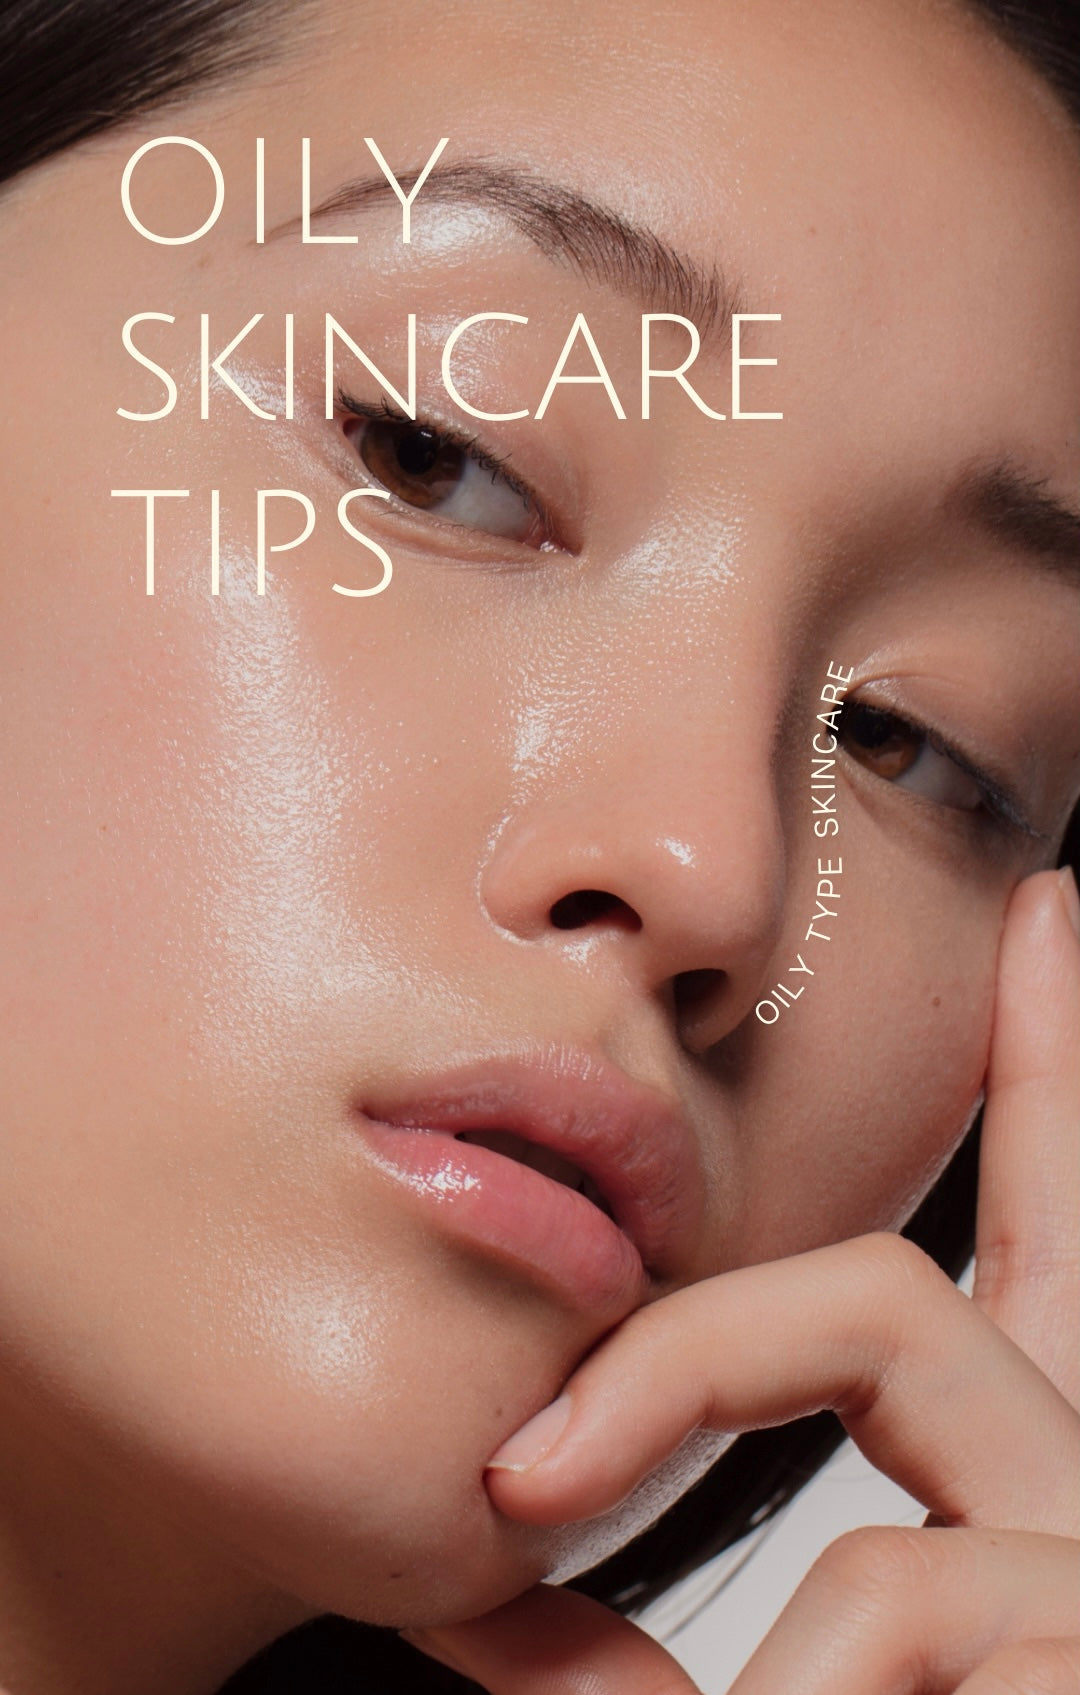 Oily skin tips